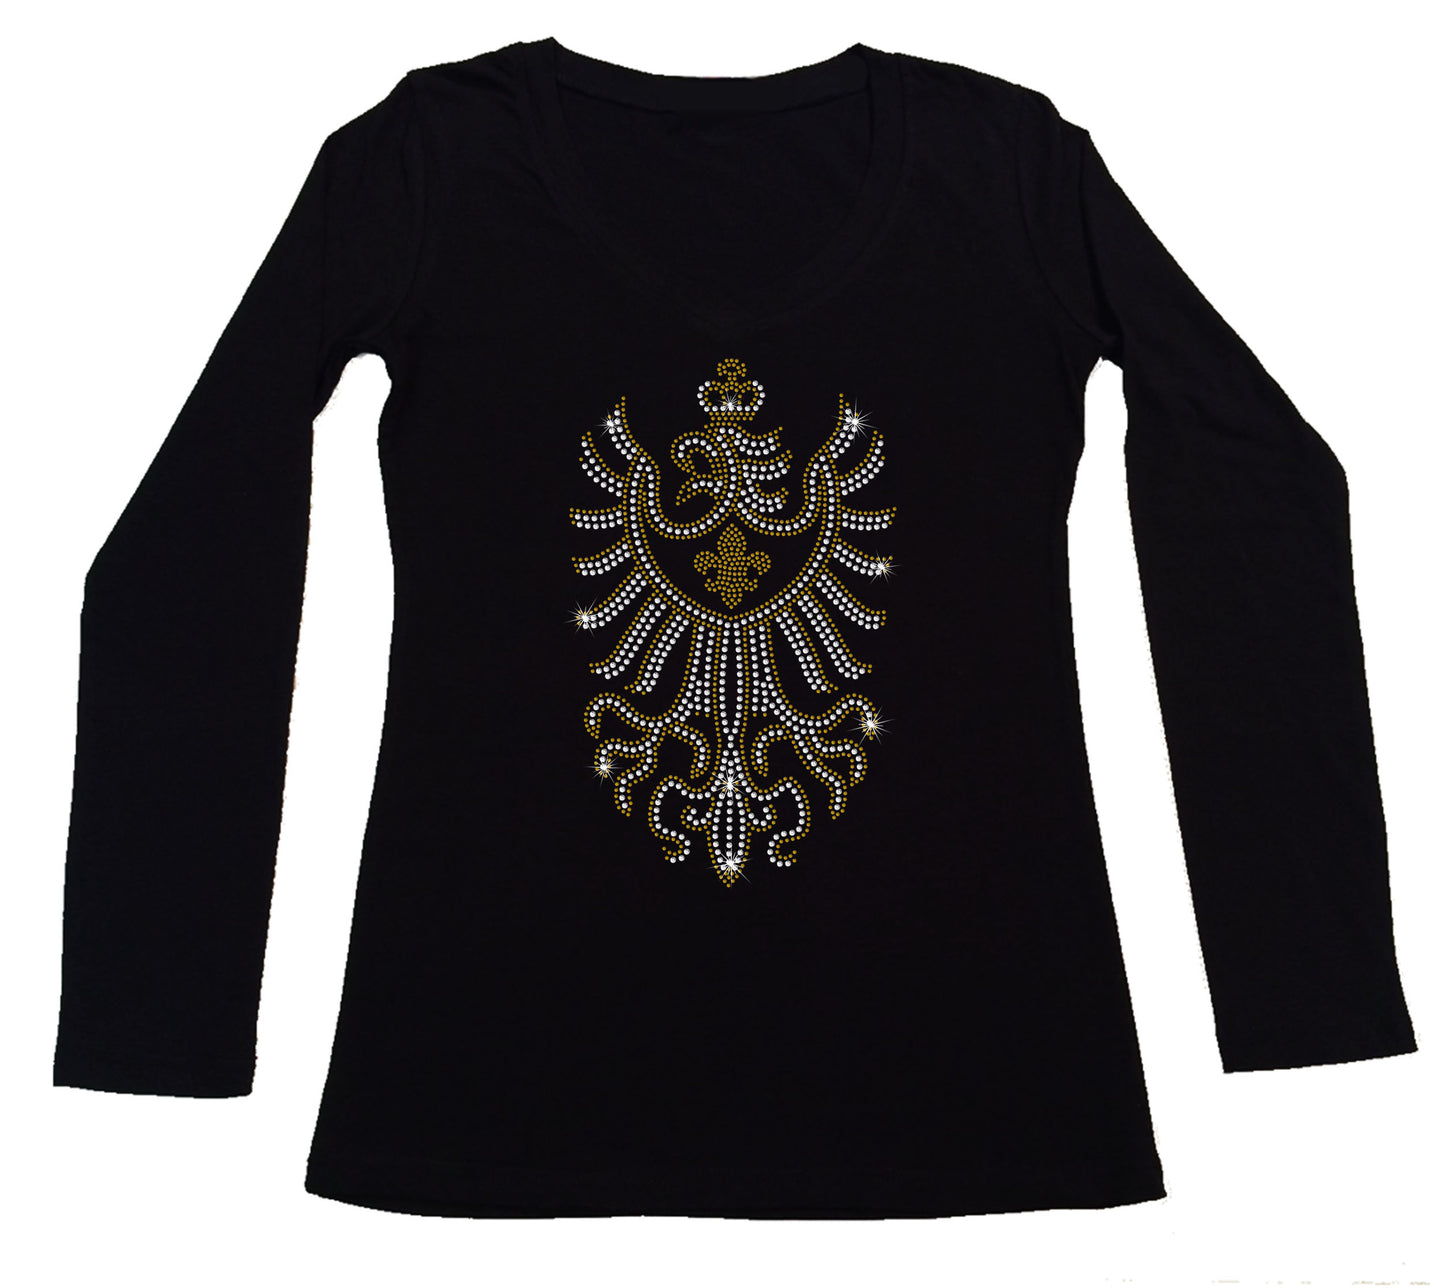 Women's Rhinestone Fitted Tight Snug Shirt European Eagle